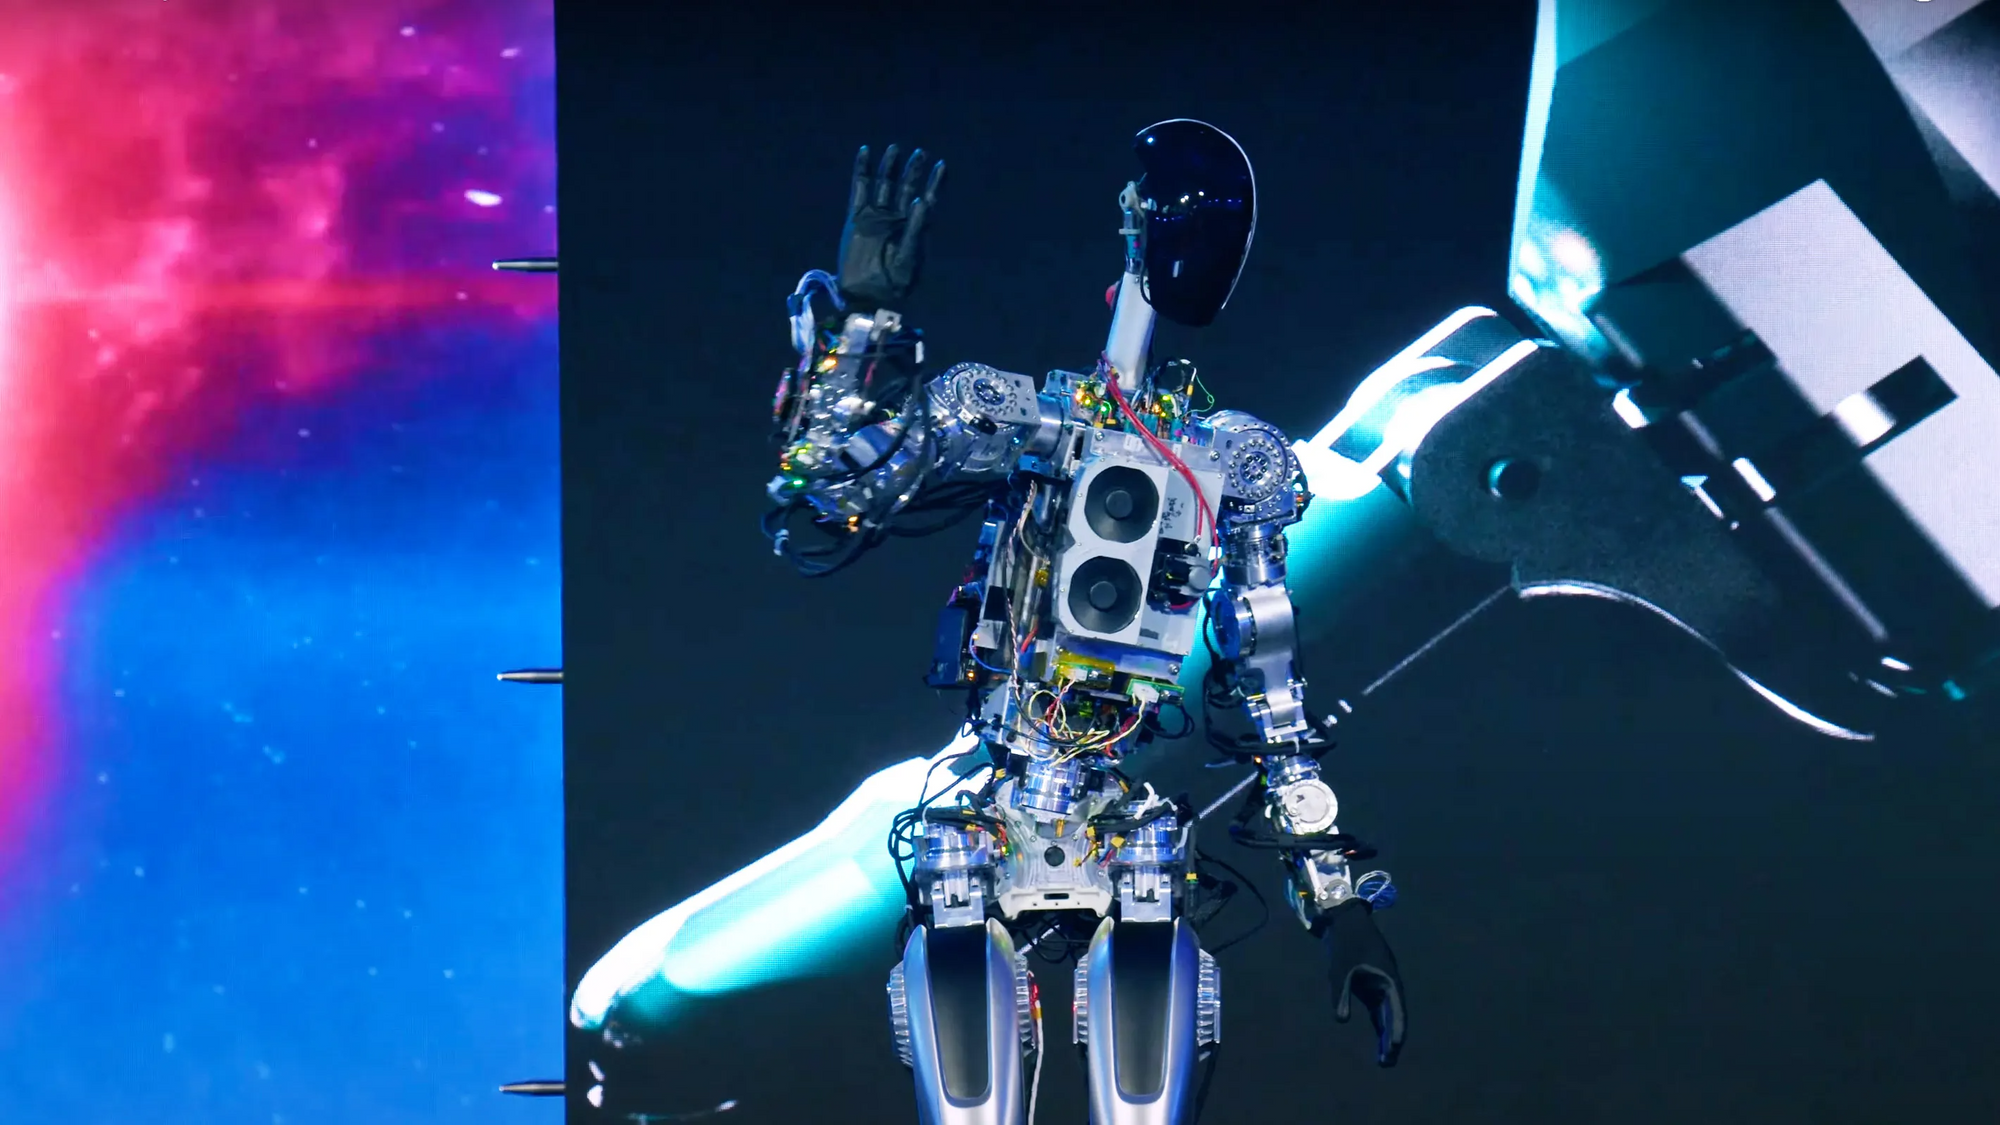 Elon Musk unveiled prototypes of the humanoid “Optimus” robot on Tesla’s AI Day